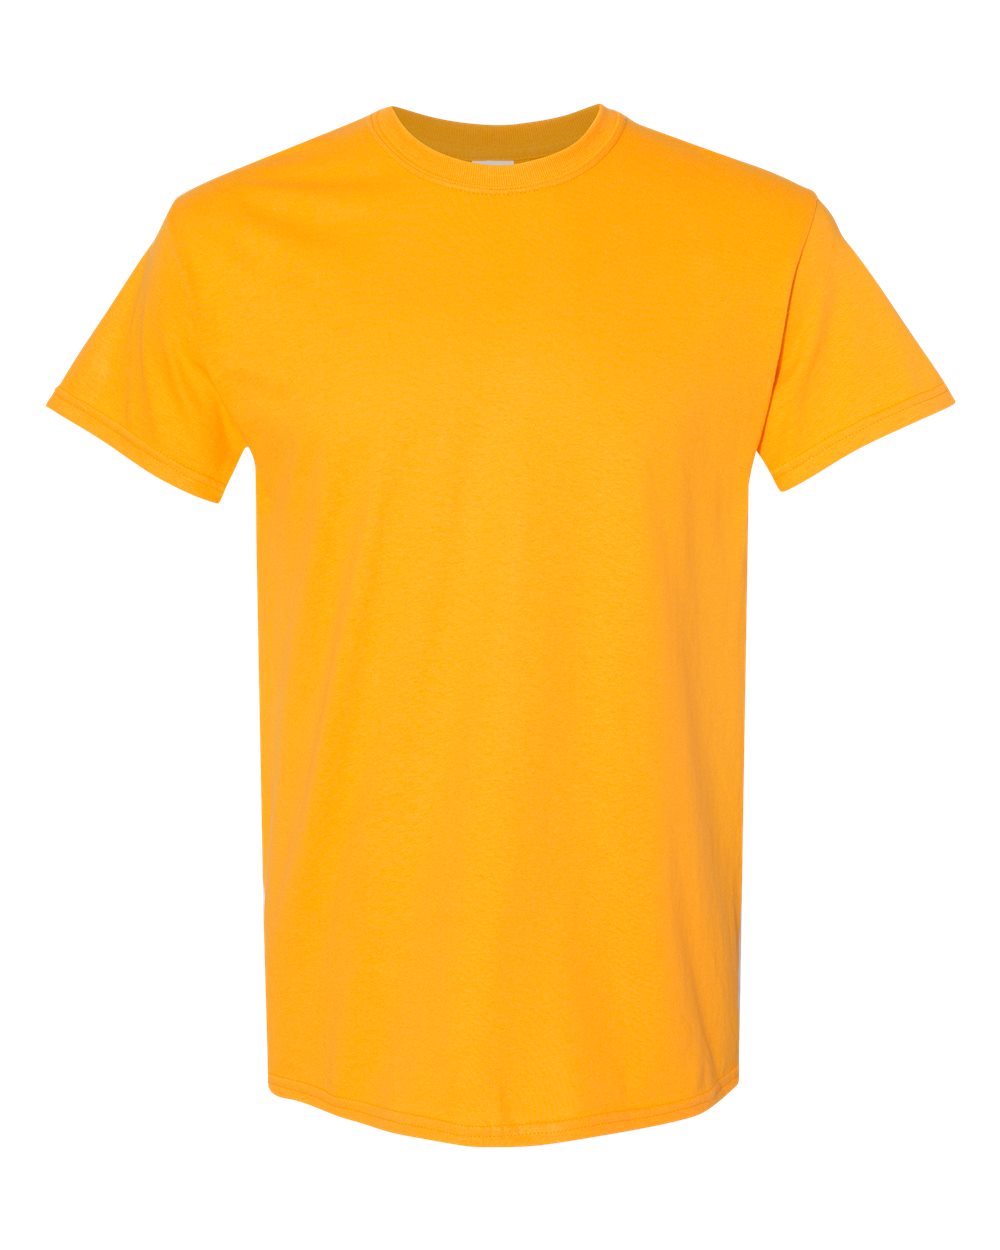 Pretreated Gildan 5000 Heavy Cotton T-Shirt - Gold